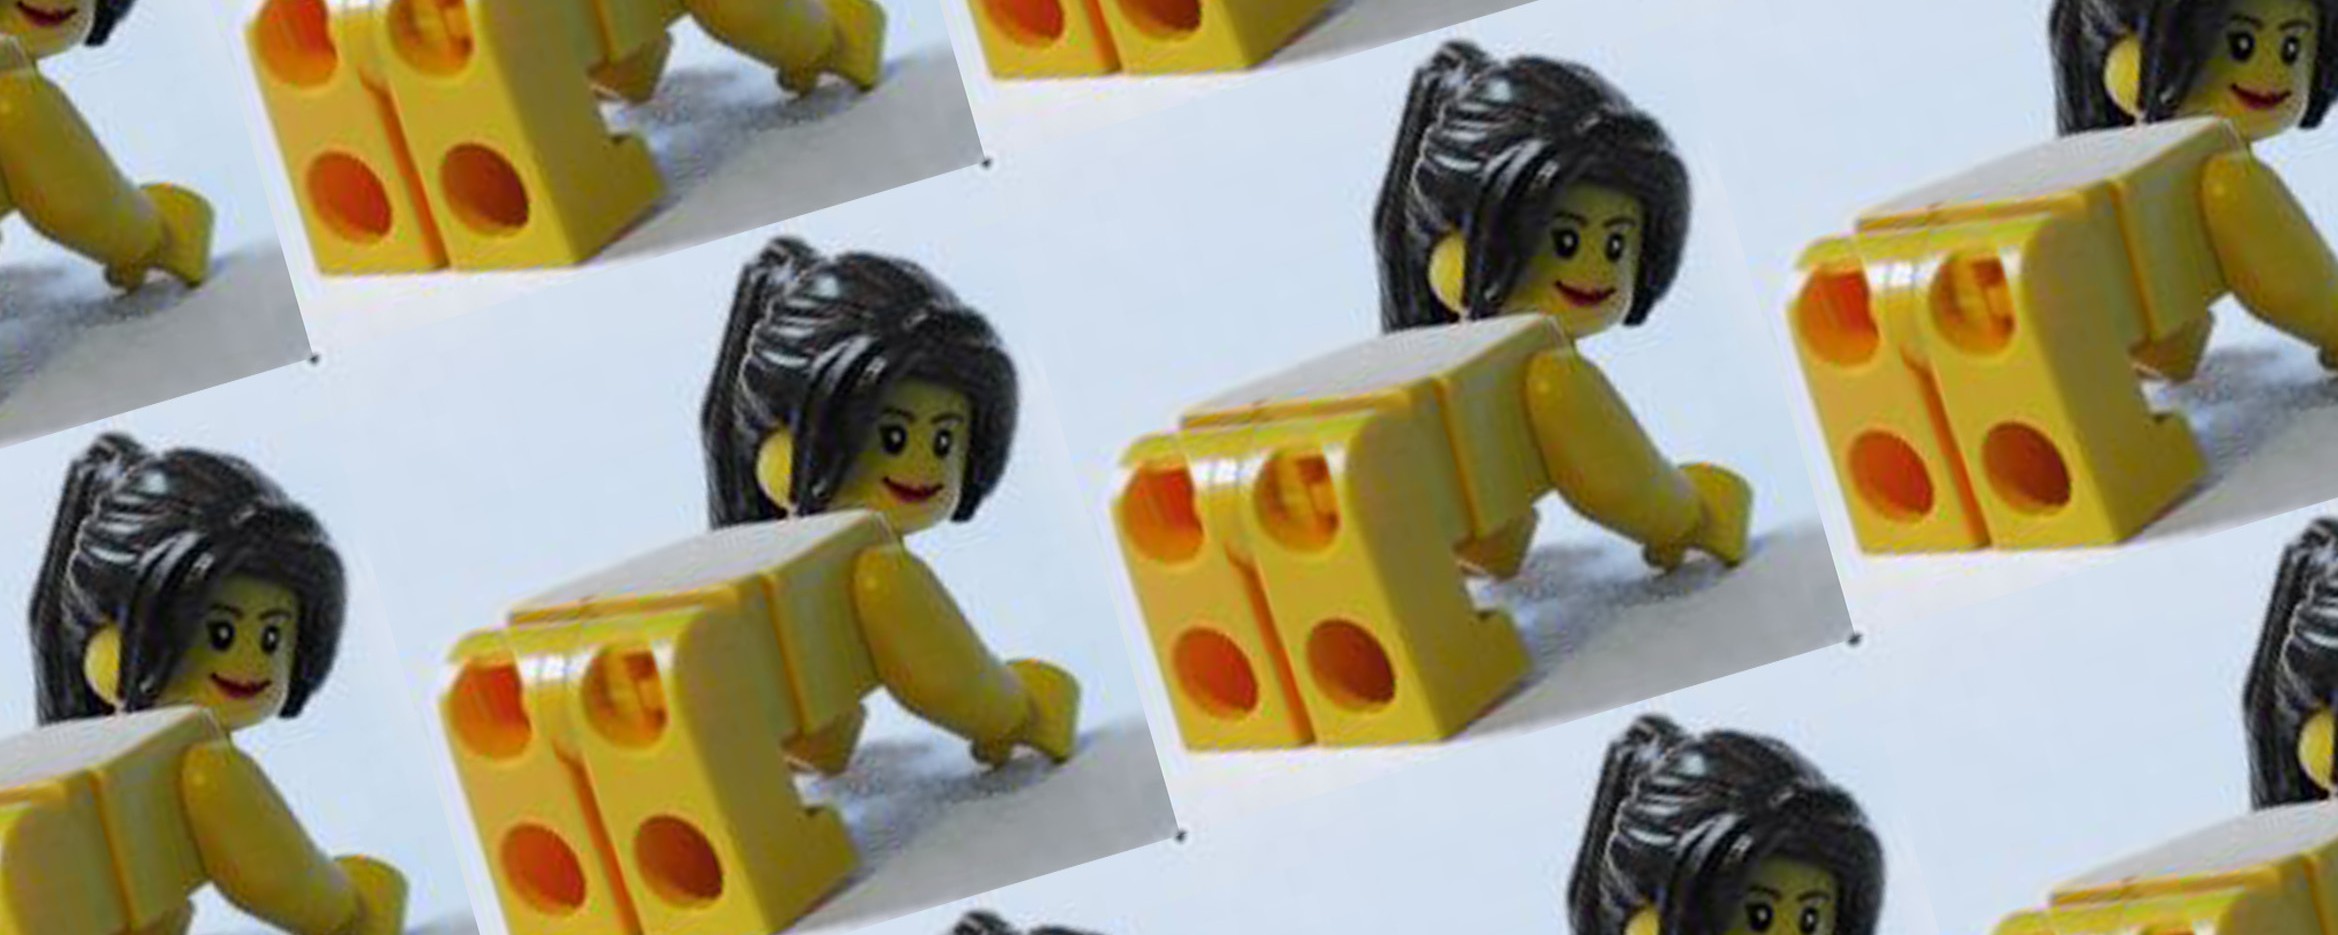 Lego ninjago porno